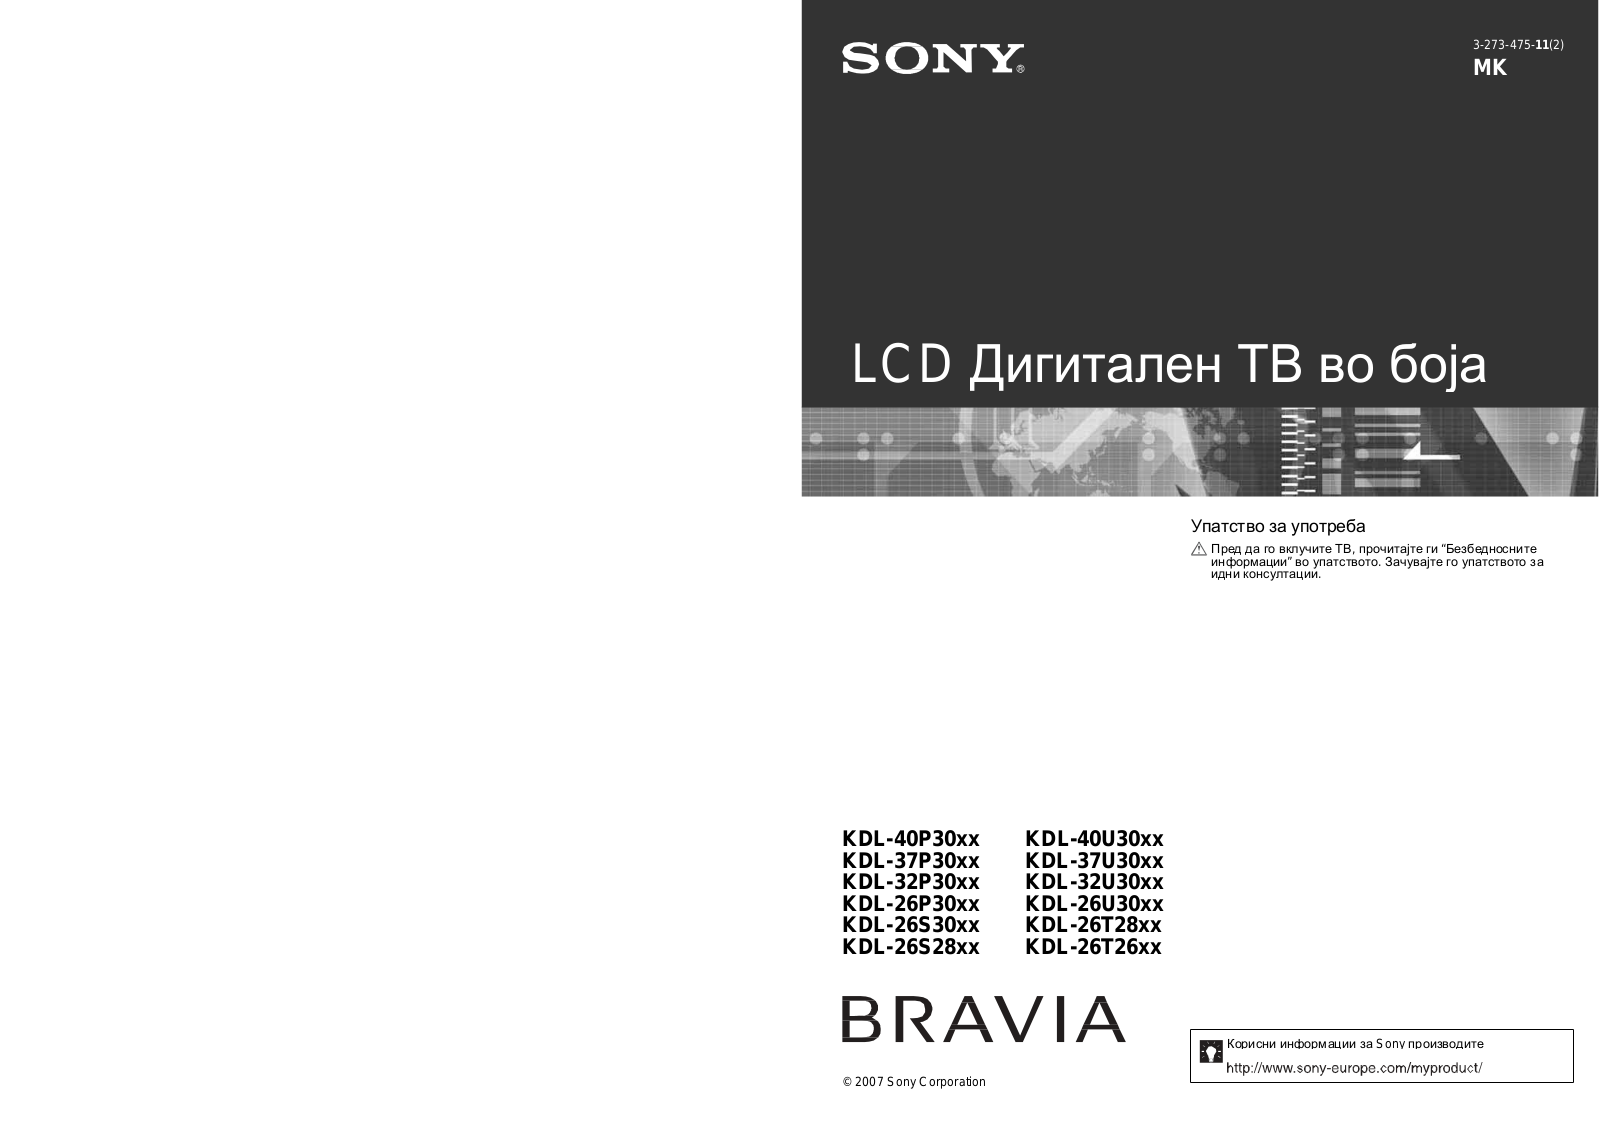 Sony KDL-40P30xx, KDL-37P30xx, KDL-32P30xx, KDL-26P30xx, KDL-26S30xx Manual